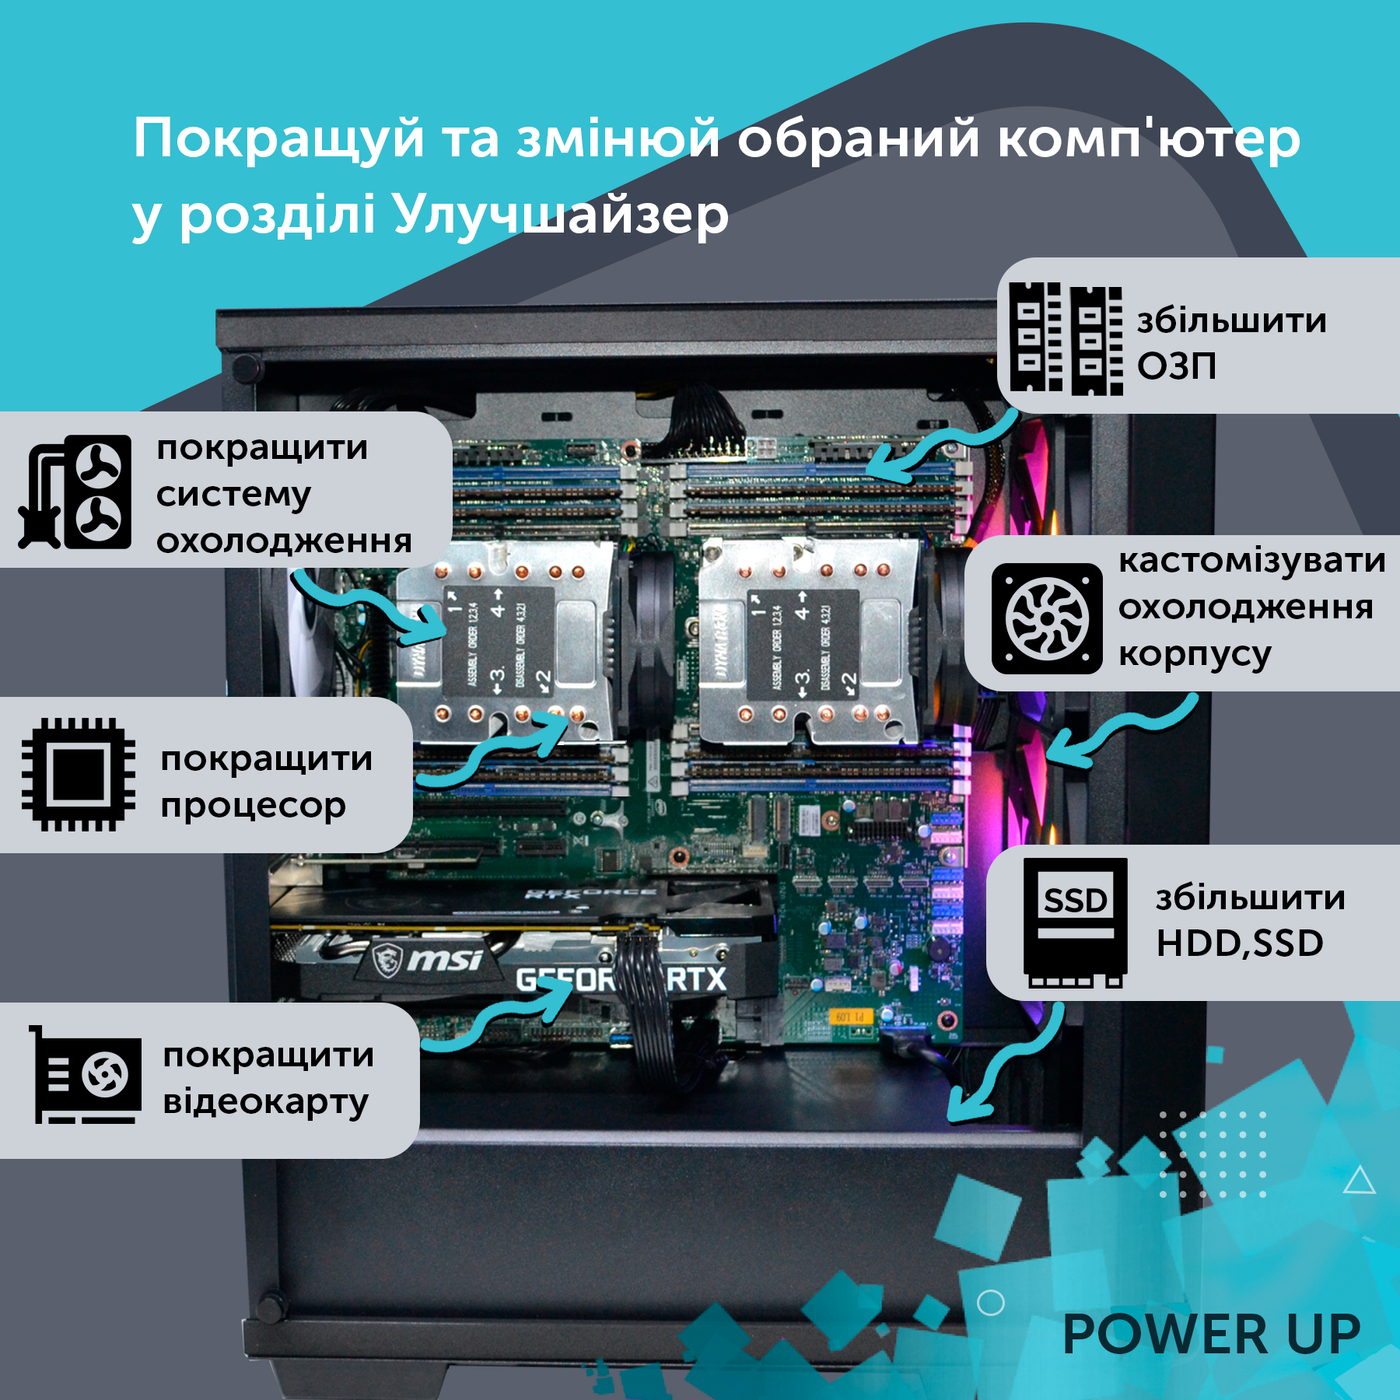 Рабочая станция PowerUp #58 Xeon E5 2690 v3/32 GB/HDD 1 TB/SSD 256GB/NVIDIA Quadro M4000 8GB